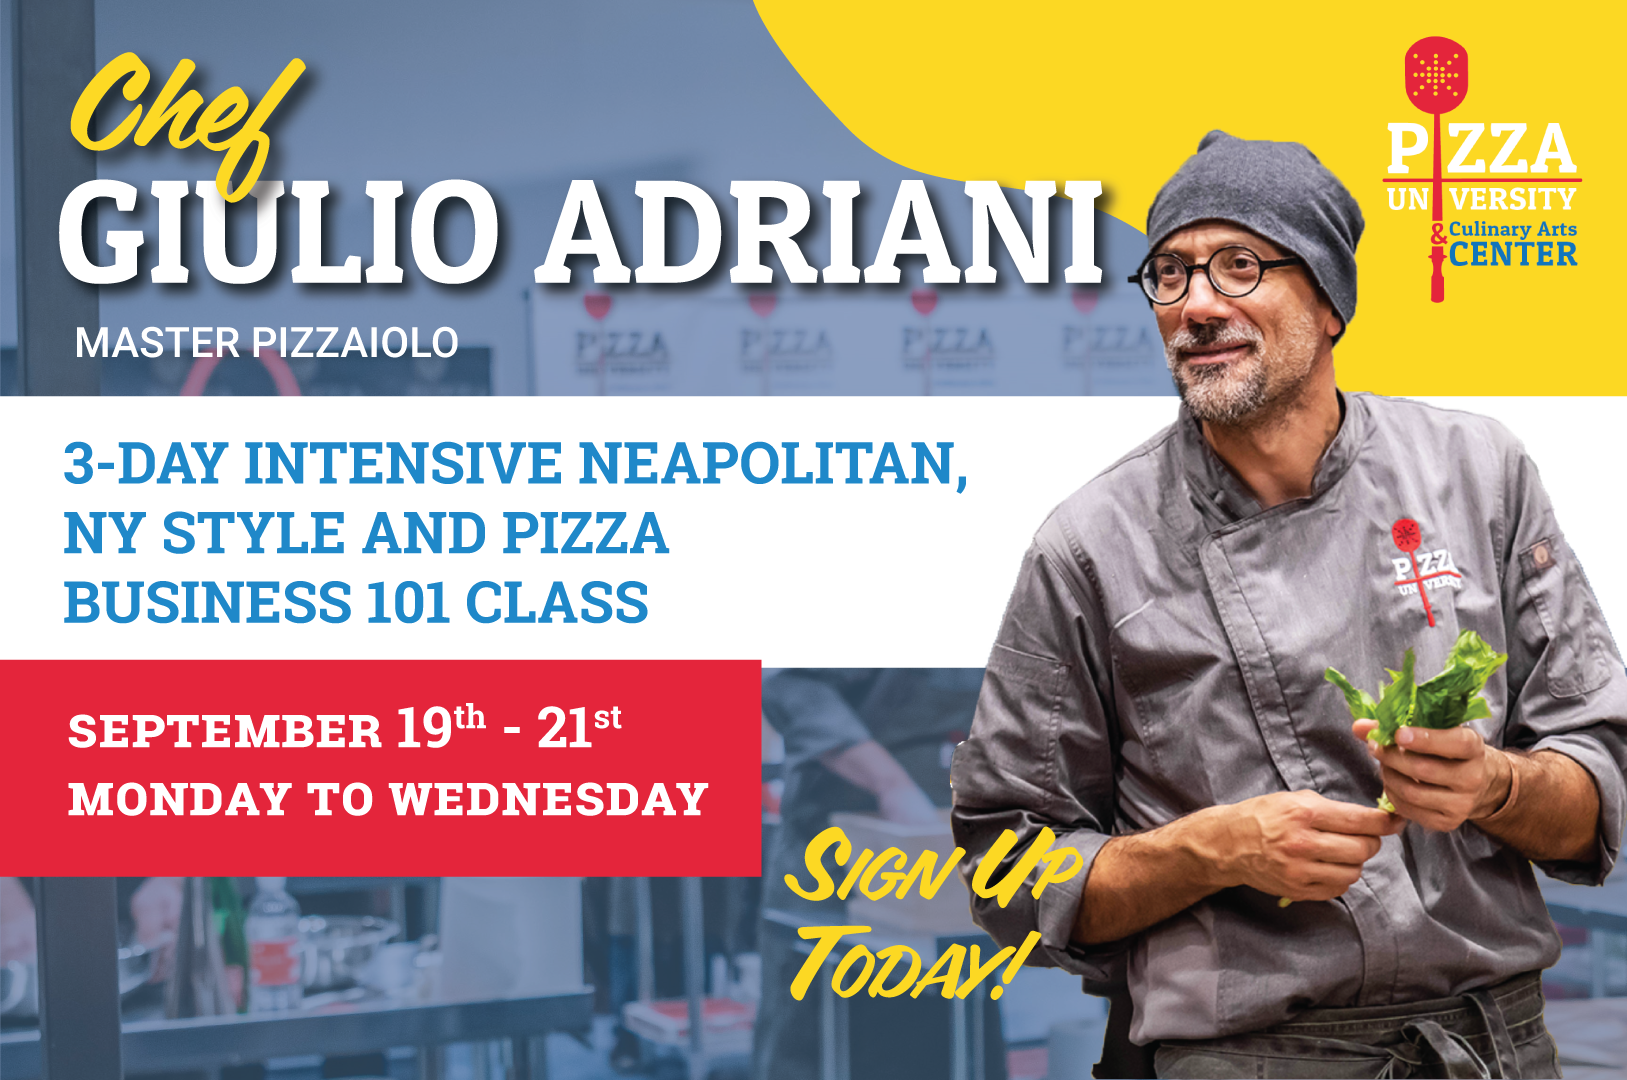 3-Day Intensive “Neapolitan, NY Style and Pizza Business 101” Class with Maestro Pizzaiolo Chef Giulio Adriani